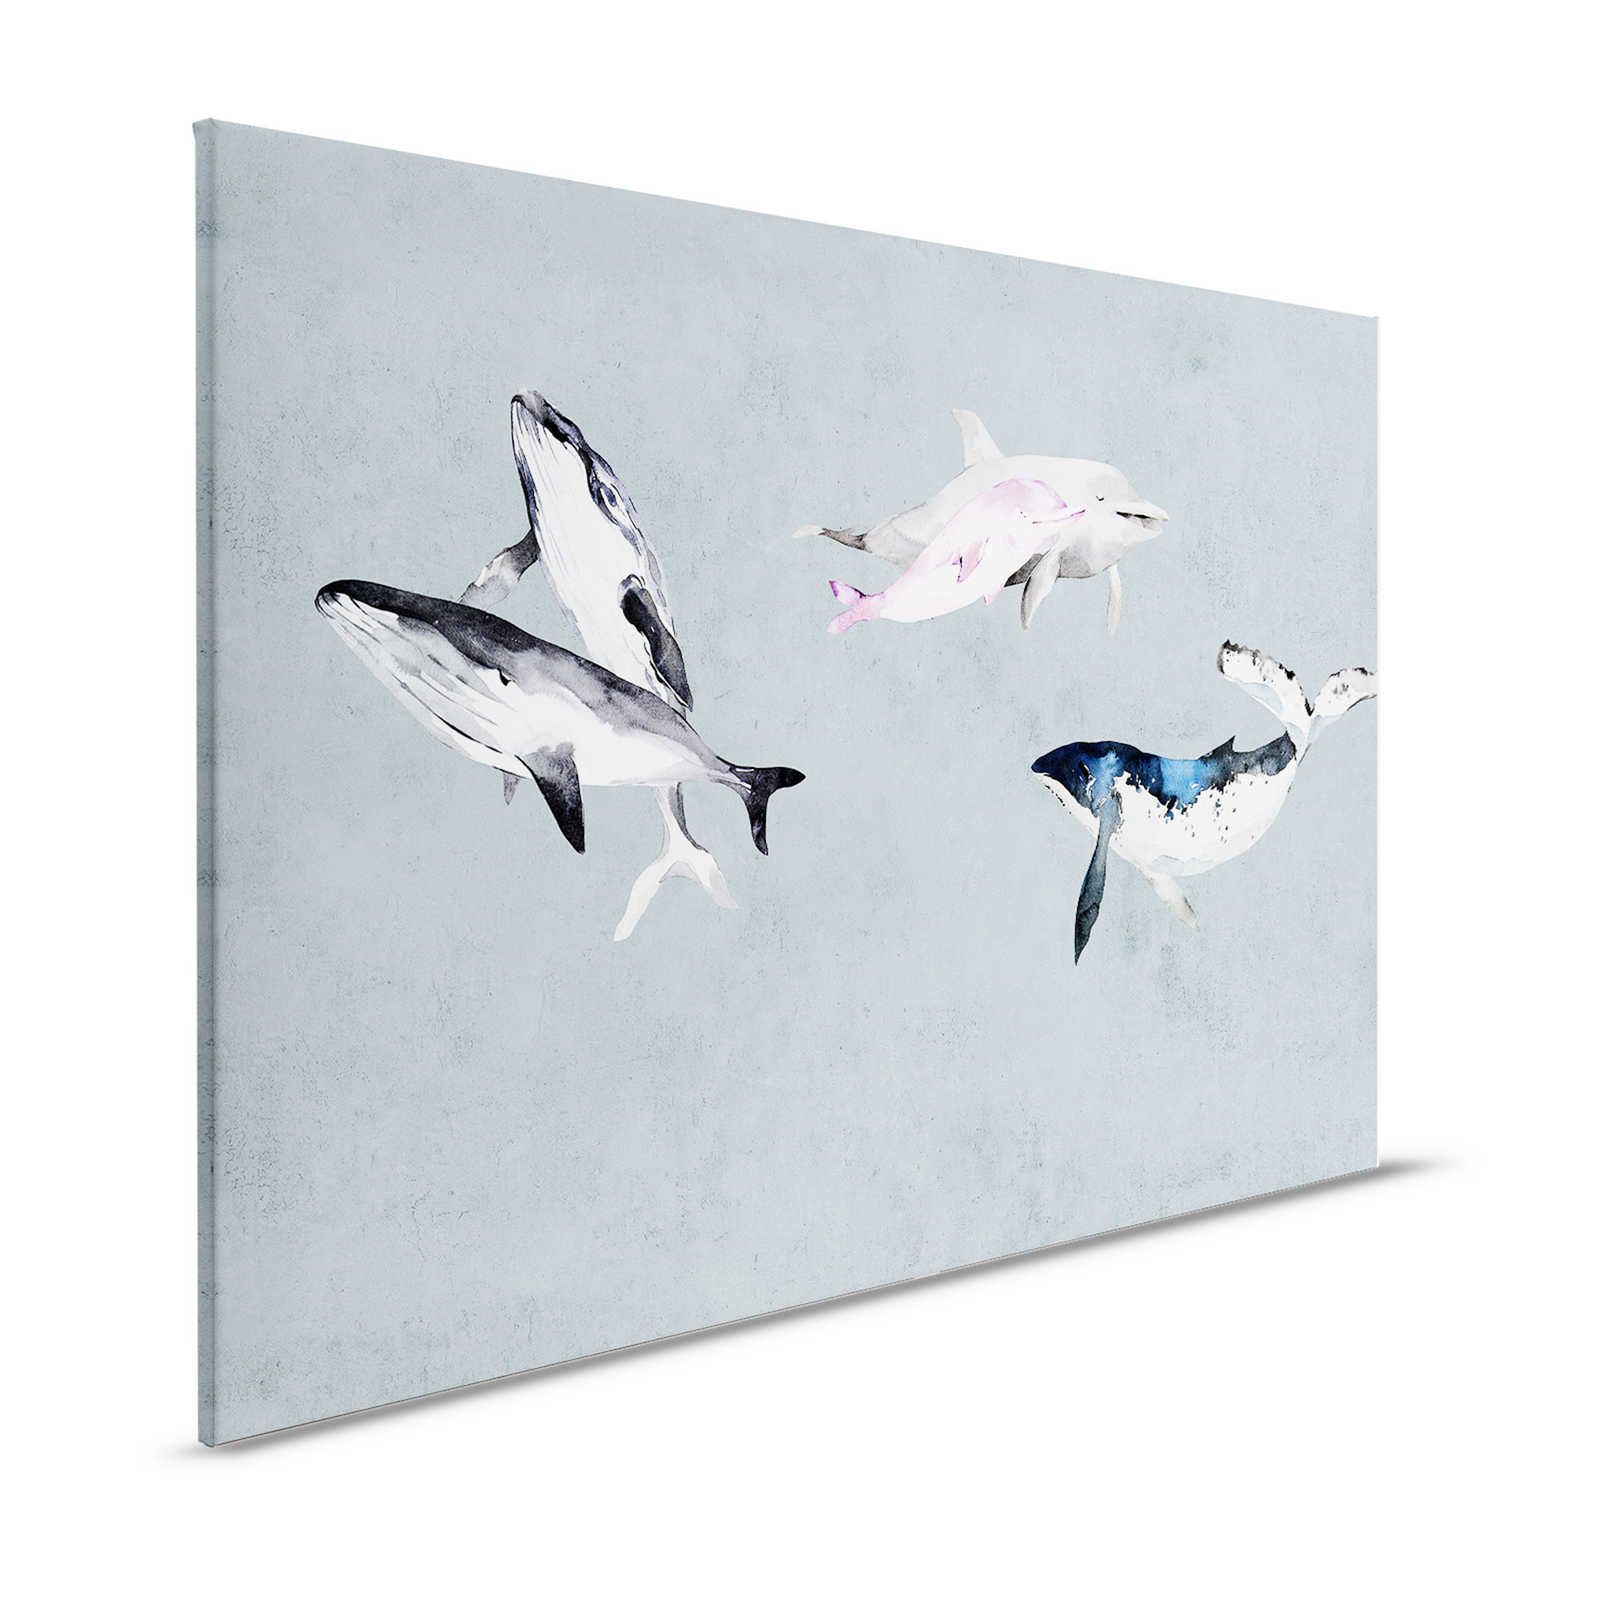 Oceans Five 1 - Toile Baleines & Dauphins style aquarelle - 1,20 m x 0,80 m
